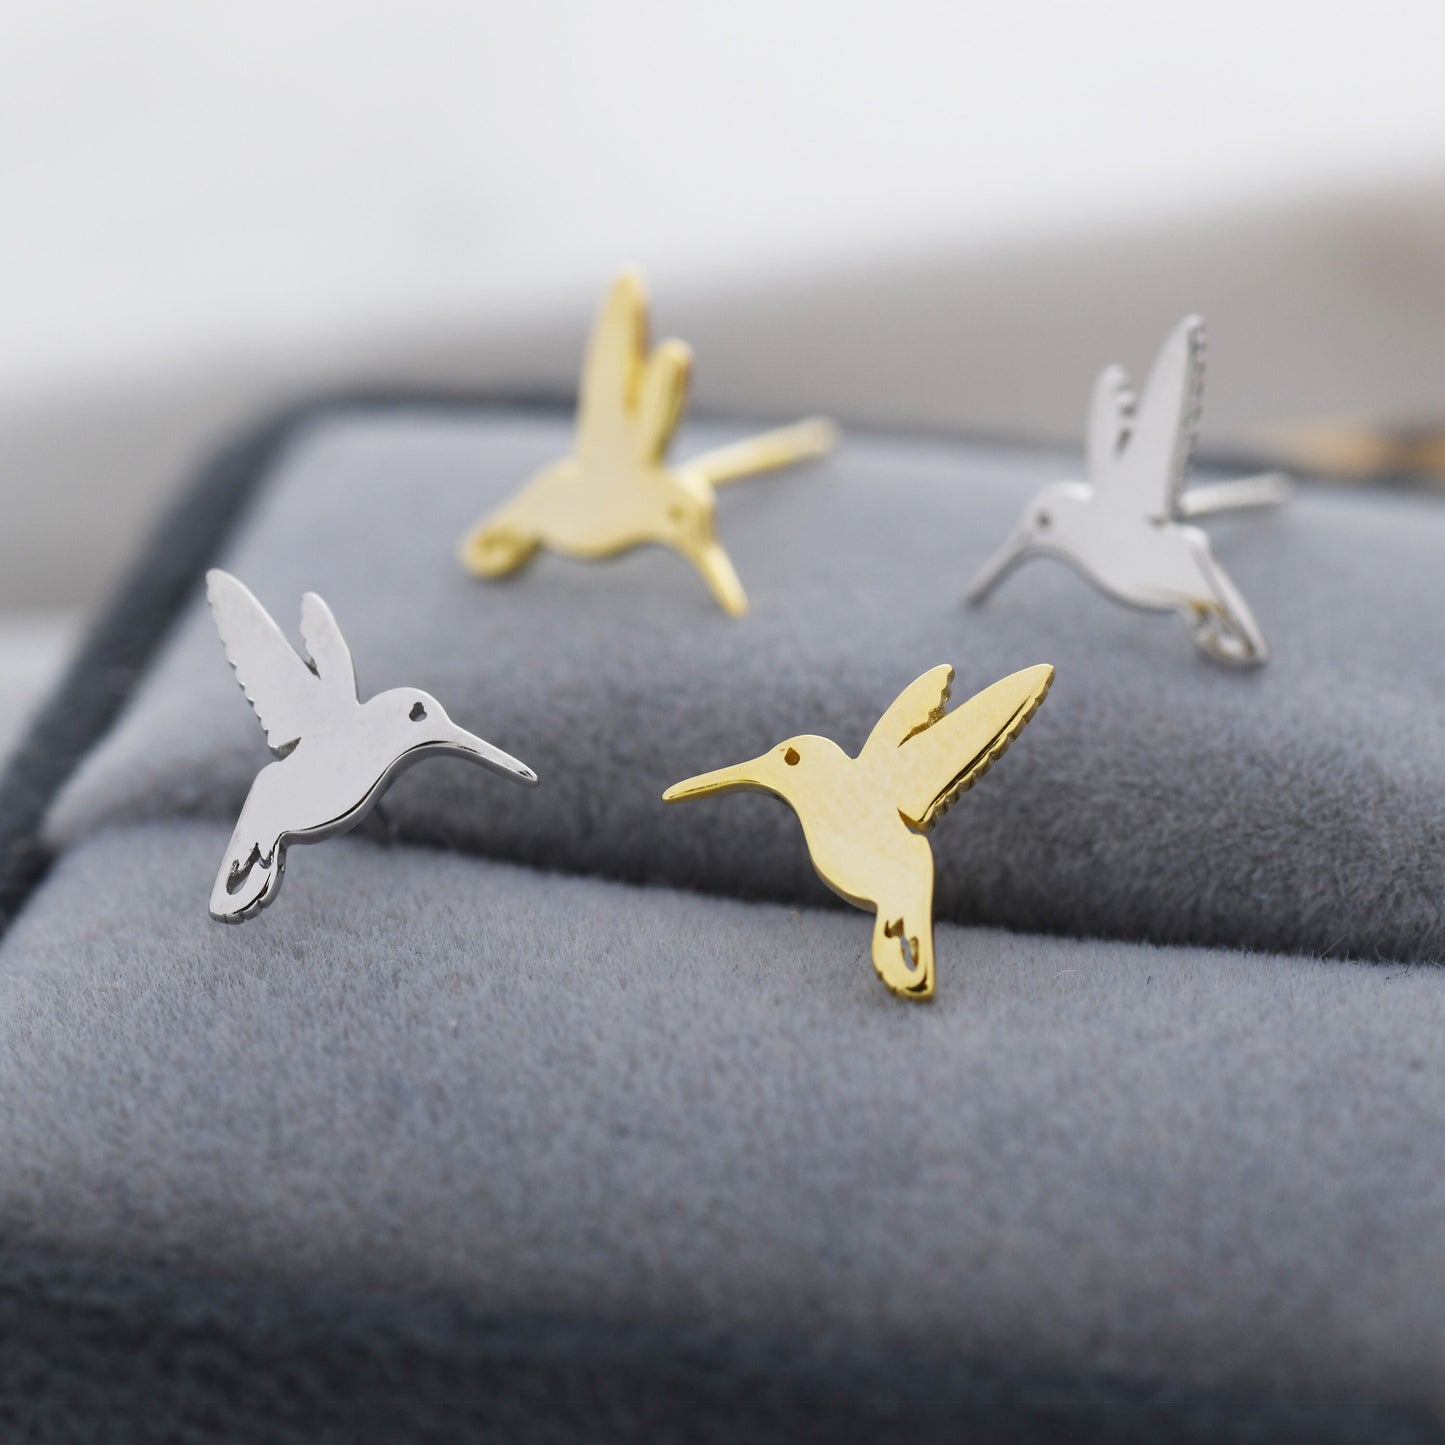 Hummingbird Stud Earrings in Sterling Silver, Silver or Gold, Flying Bird Earrings, Nature Inspired Animal Earrings